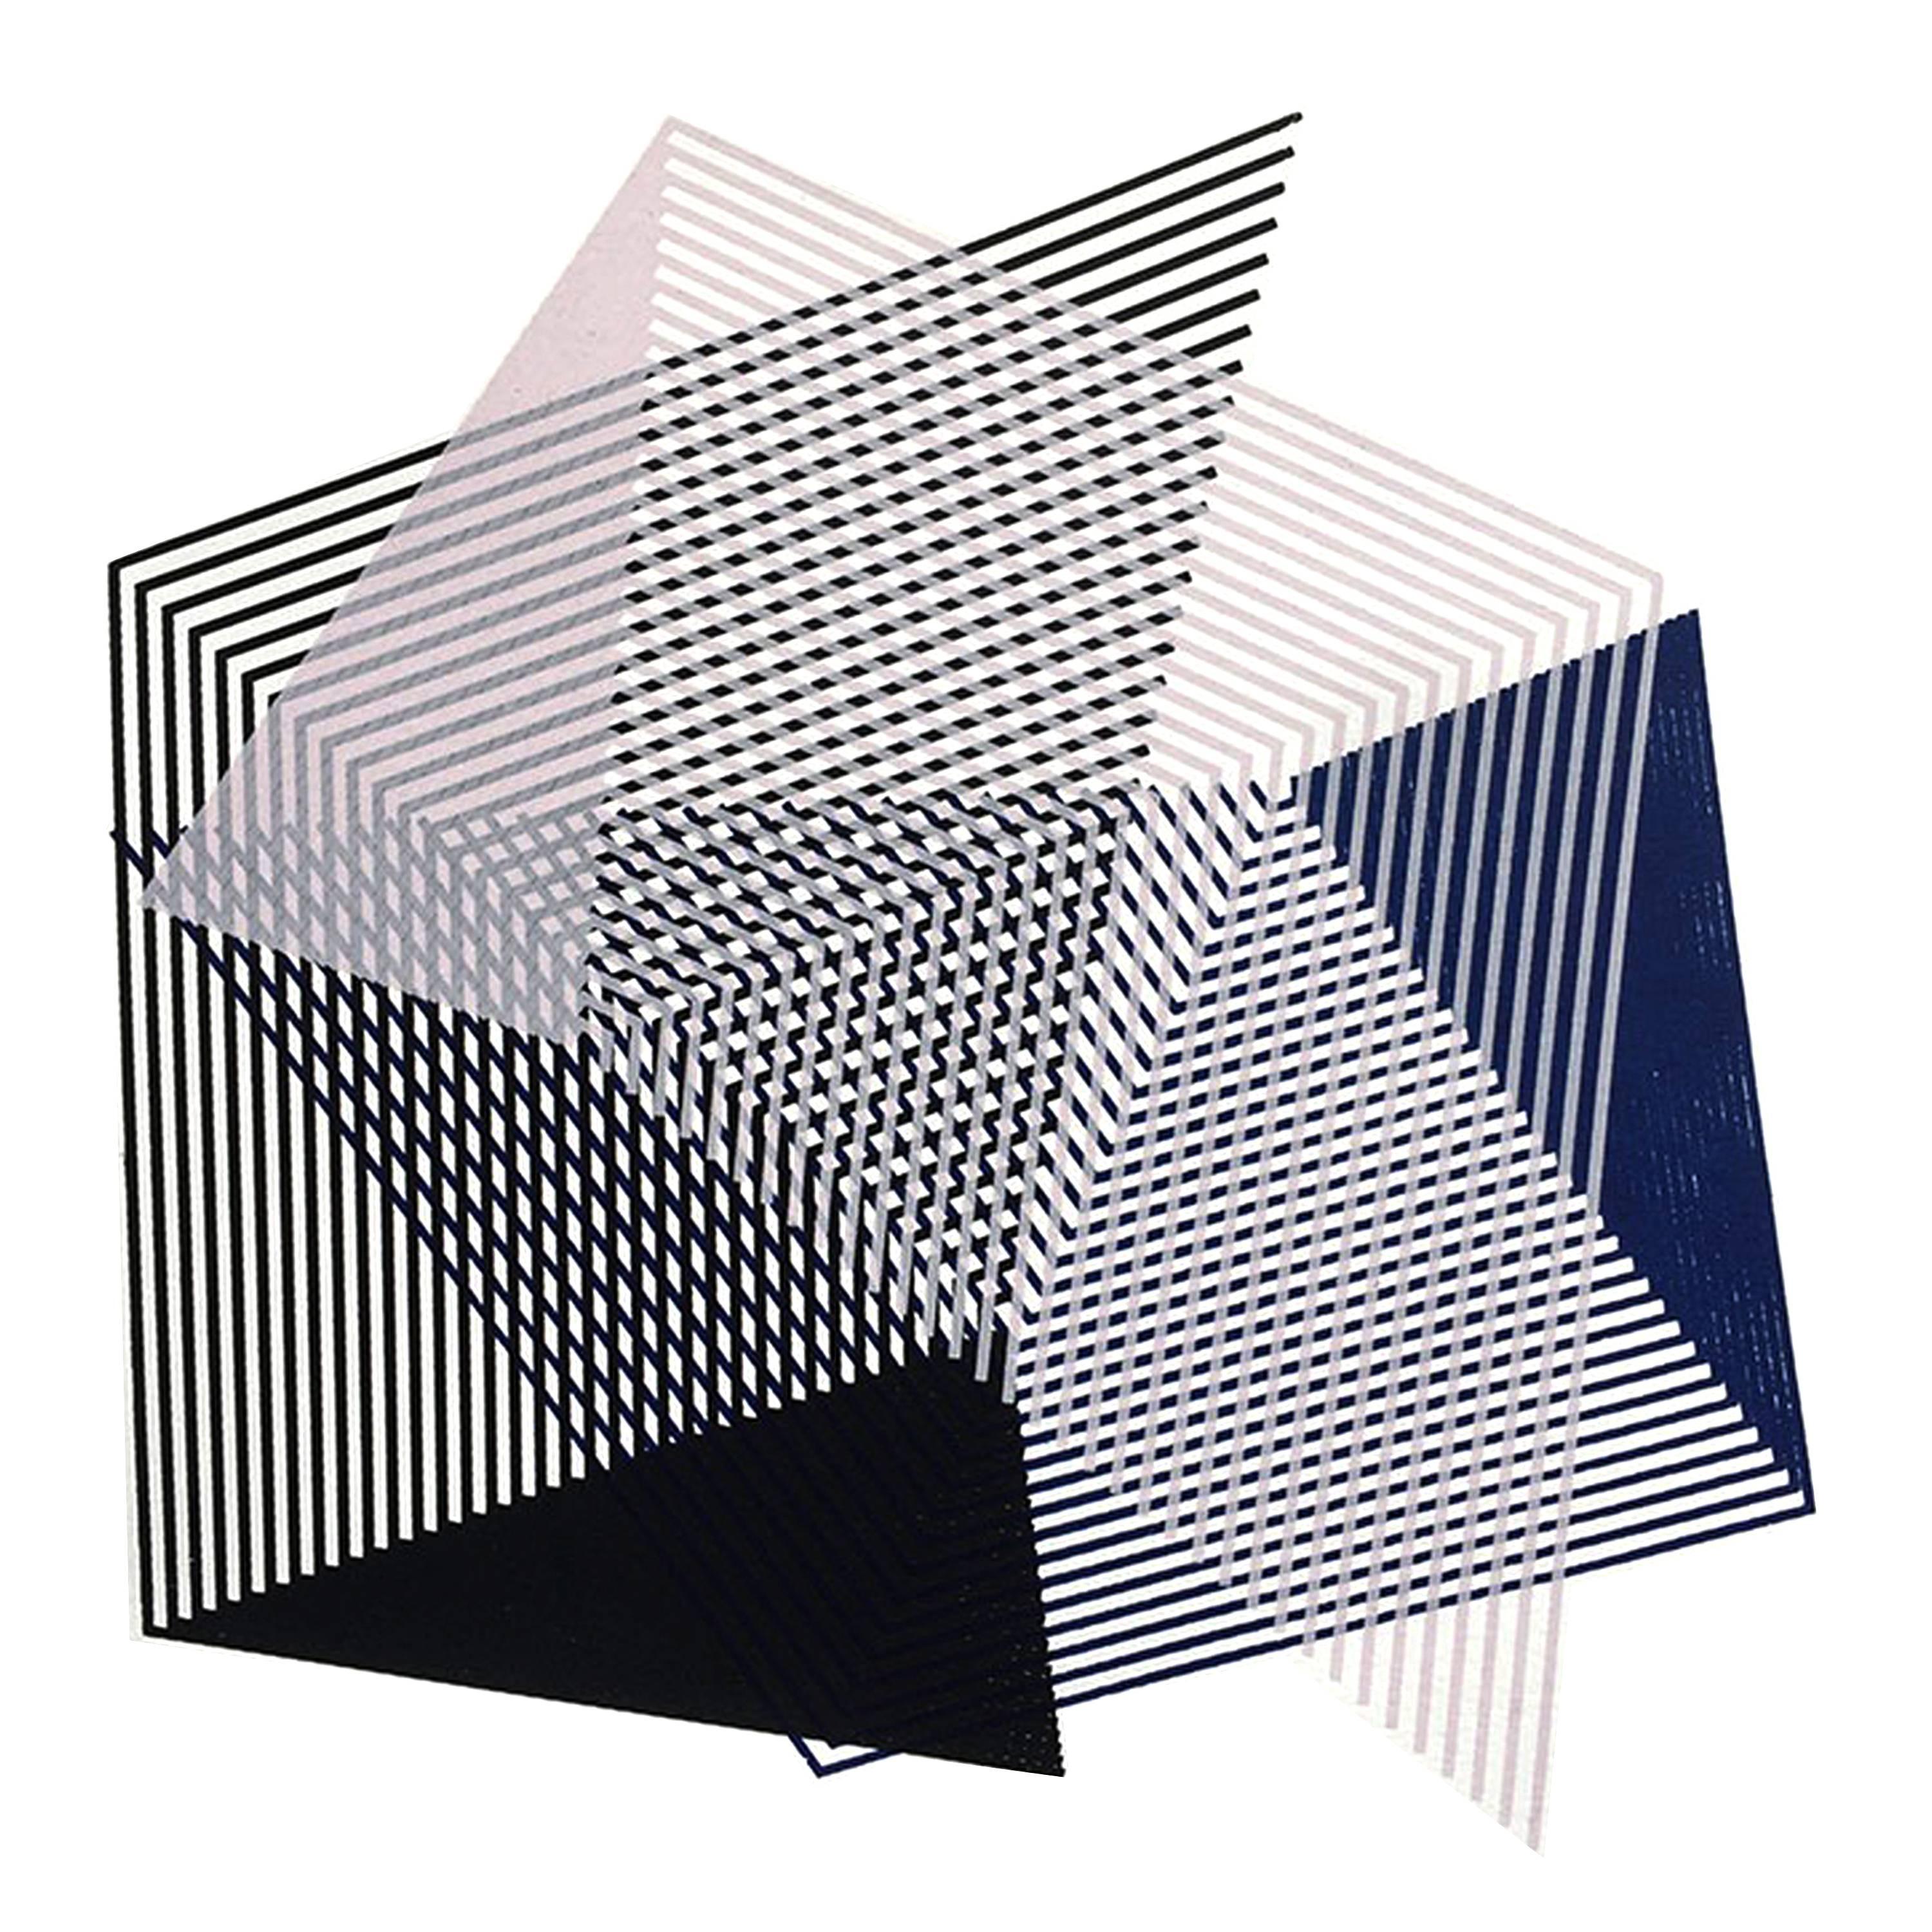 Geometric Limited Edition Hand-Pulled Silkscreen Print by Kate Banazi